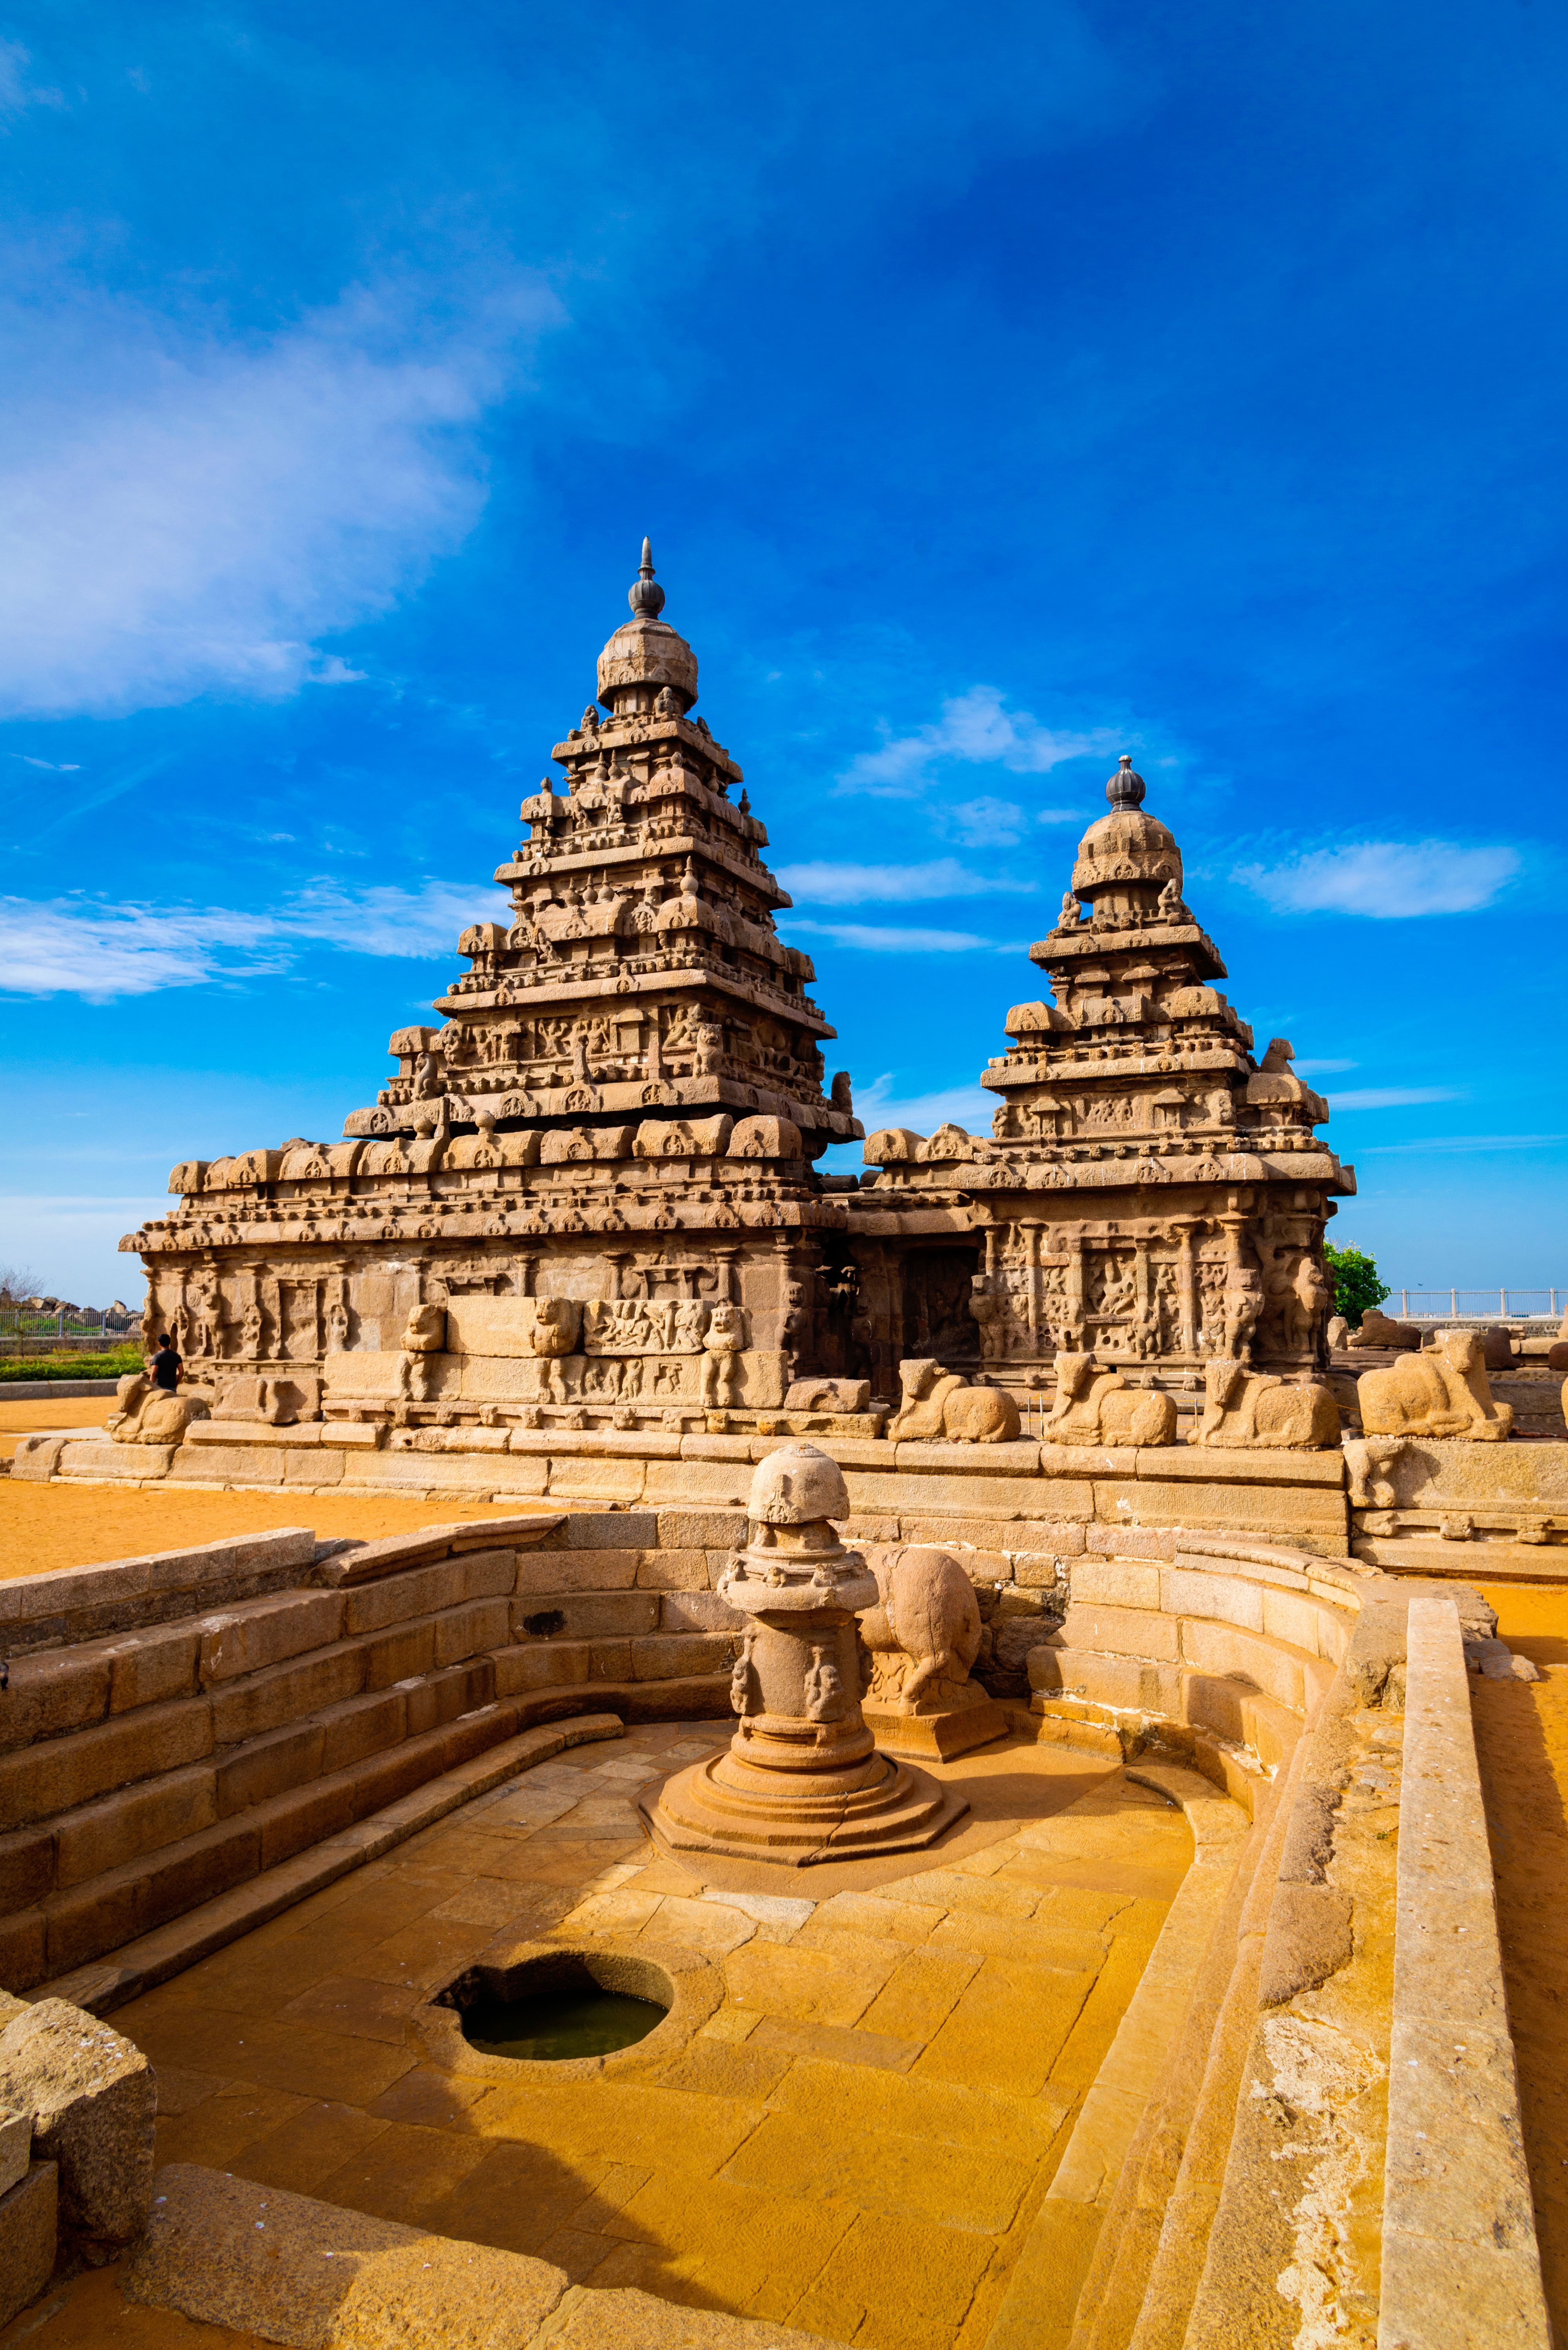 Shore temple, world heritage site in Mahabalipuram